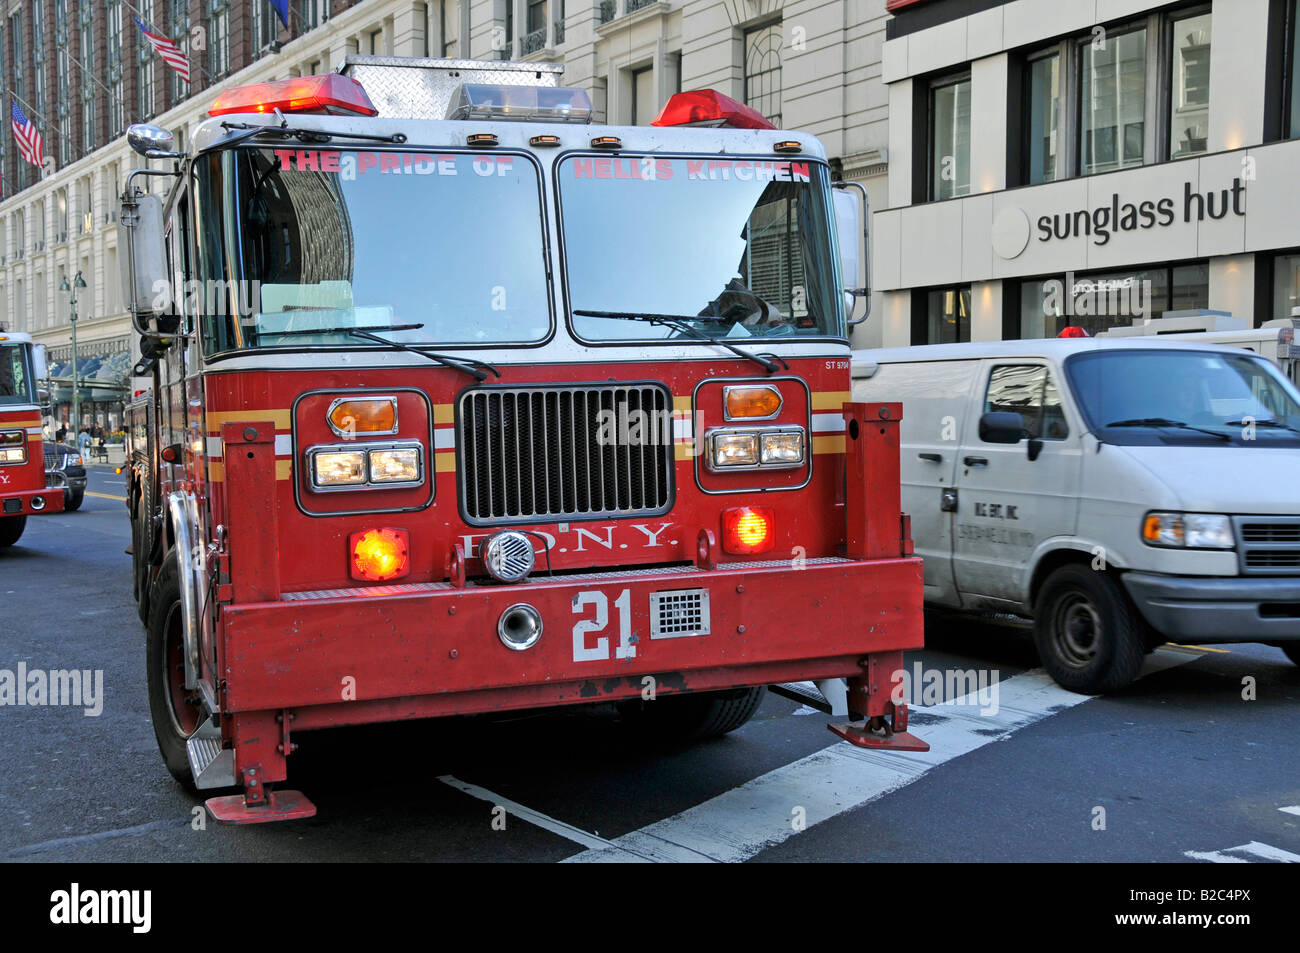 Fire engine, Ladder 21, New York City Fire Department or Fire Department of the City of New York, FDNY, professional fire briga Stock Photo